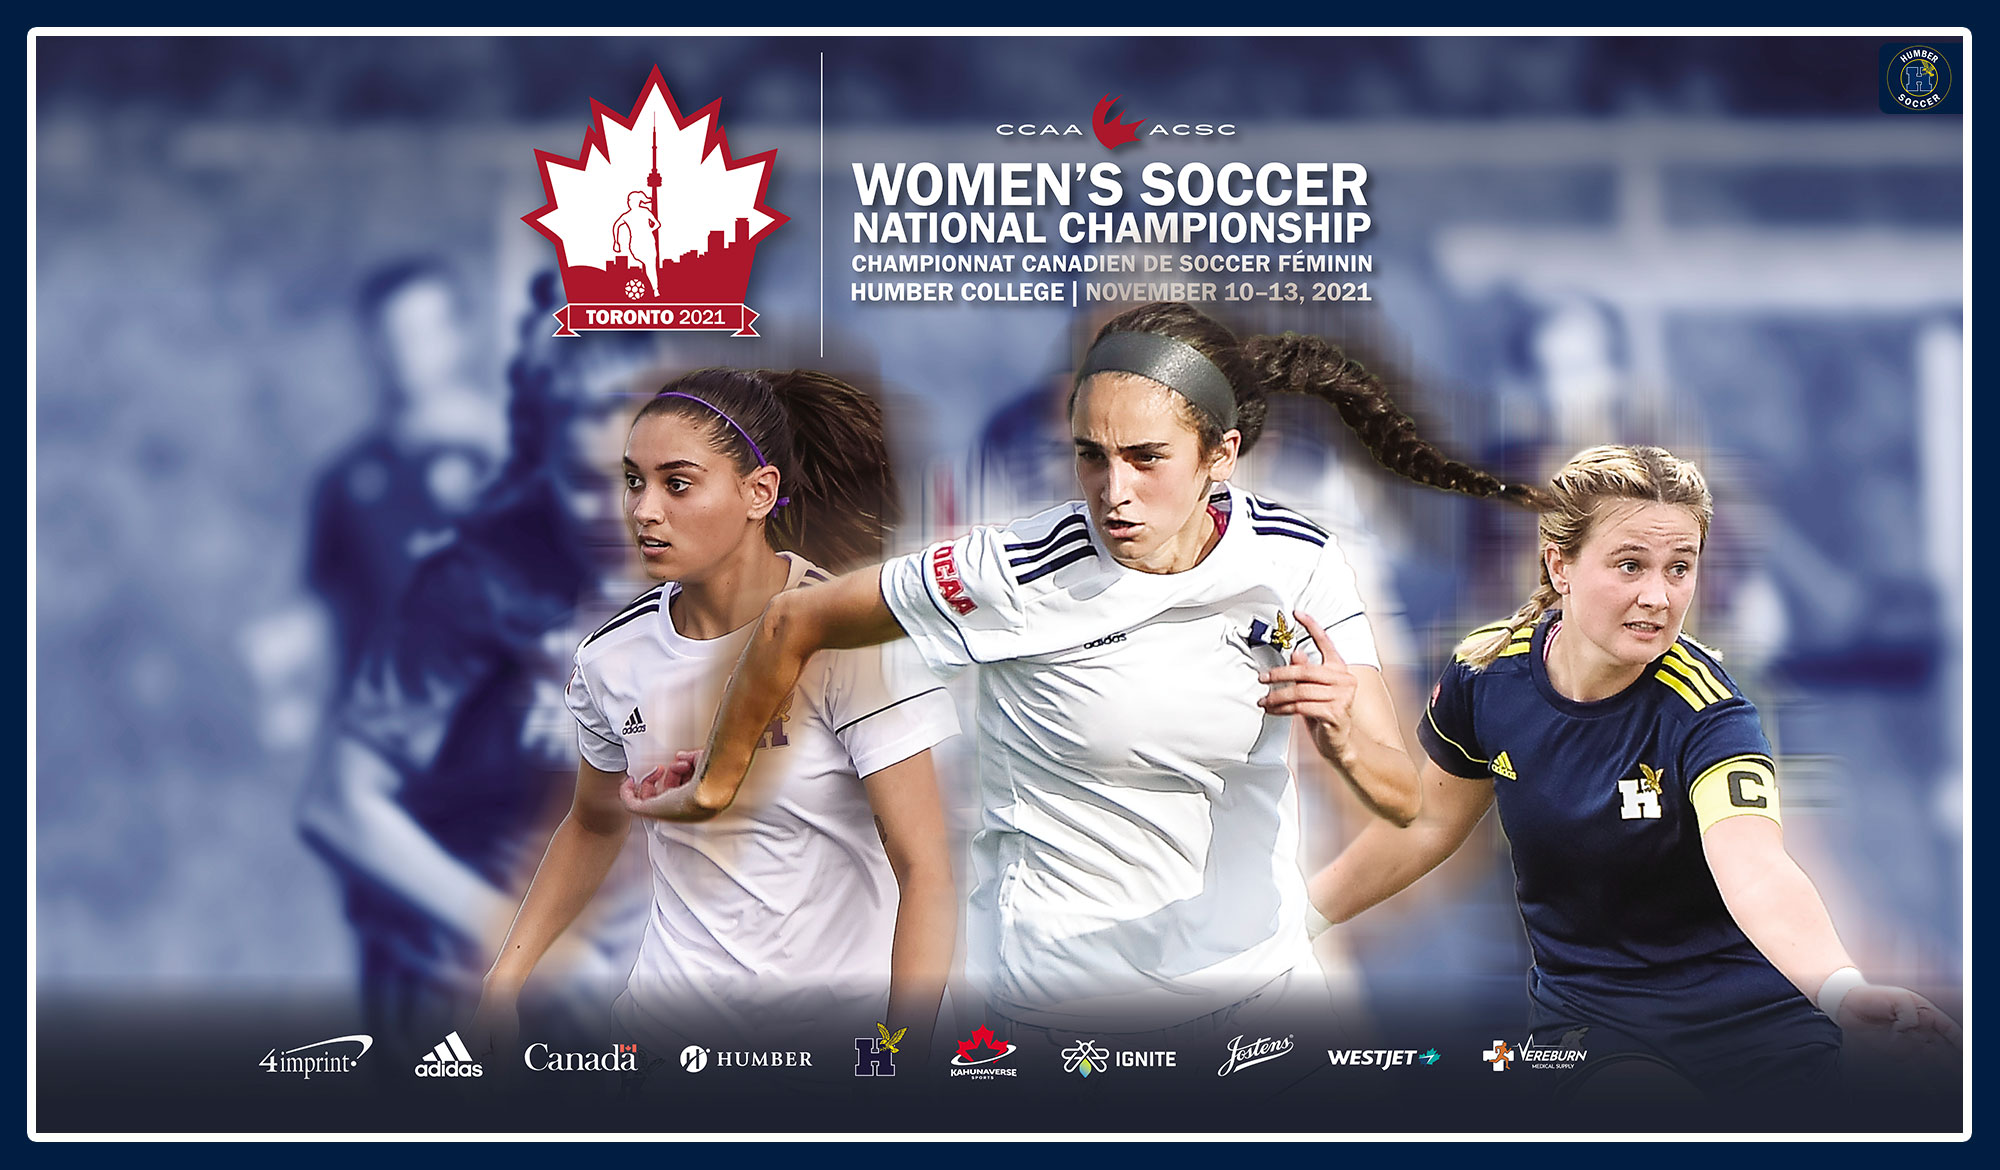 2021 CCAA women's soccer championship banner